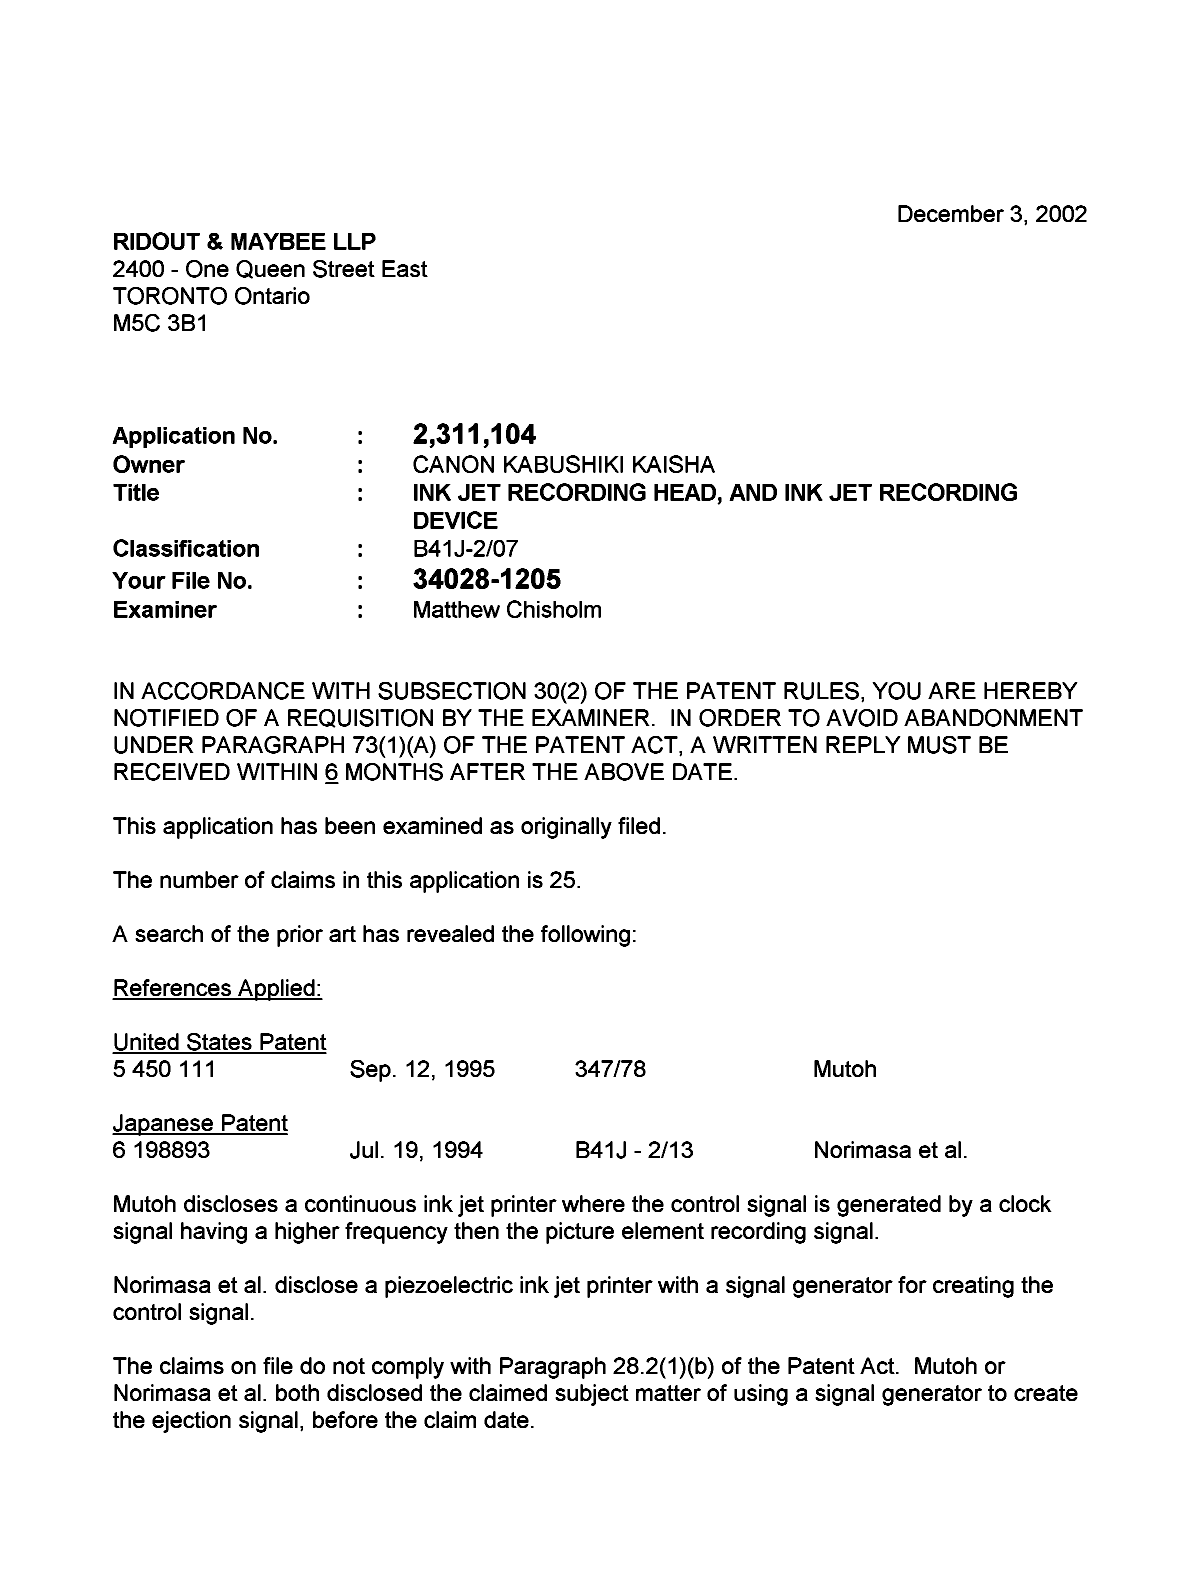 Canadian Patent Document 2311104. Prosecution-Amendment 20021203. Image 1 of 2